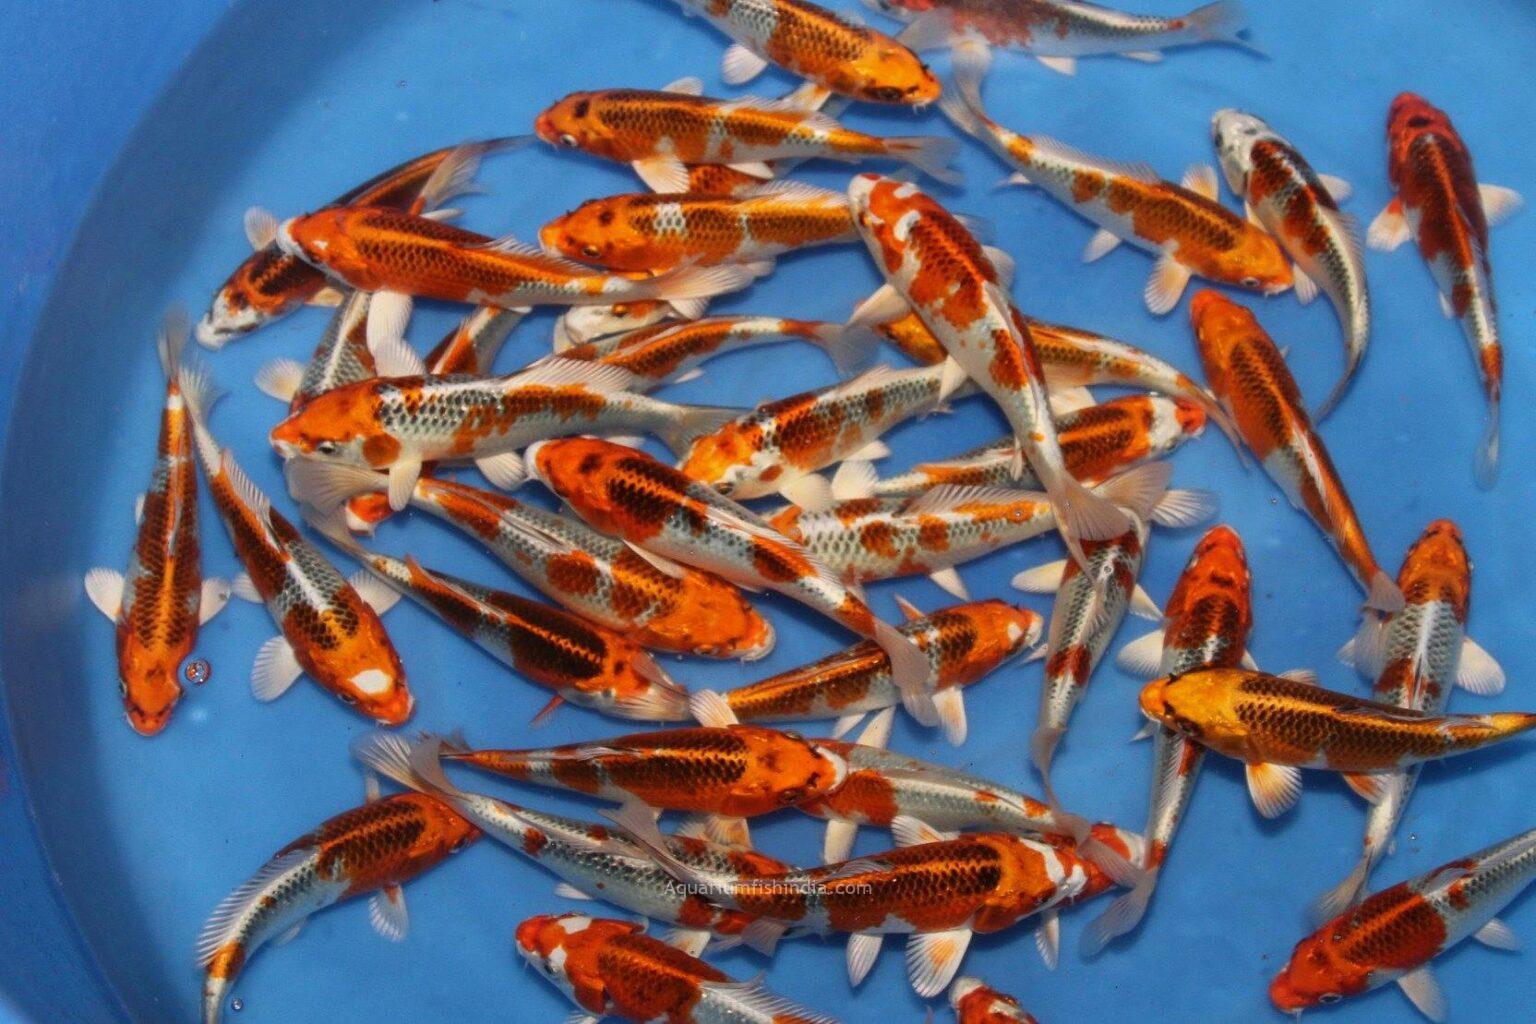 Buy Imported Japanese Small Koi Fish Online India - Aquarium Fish India